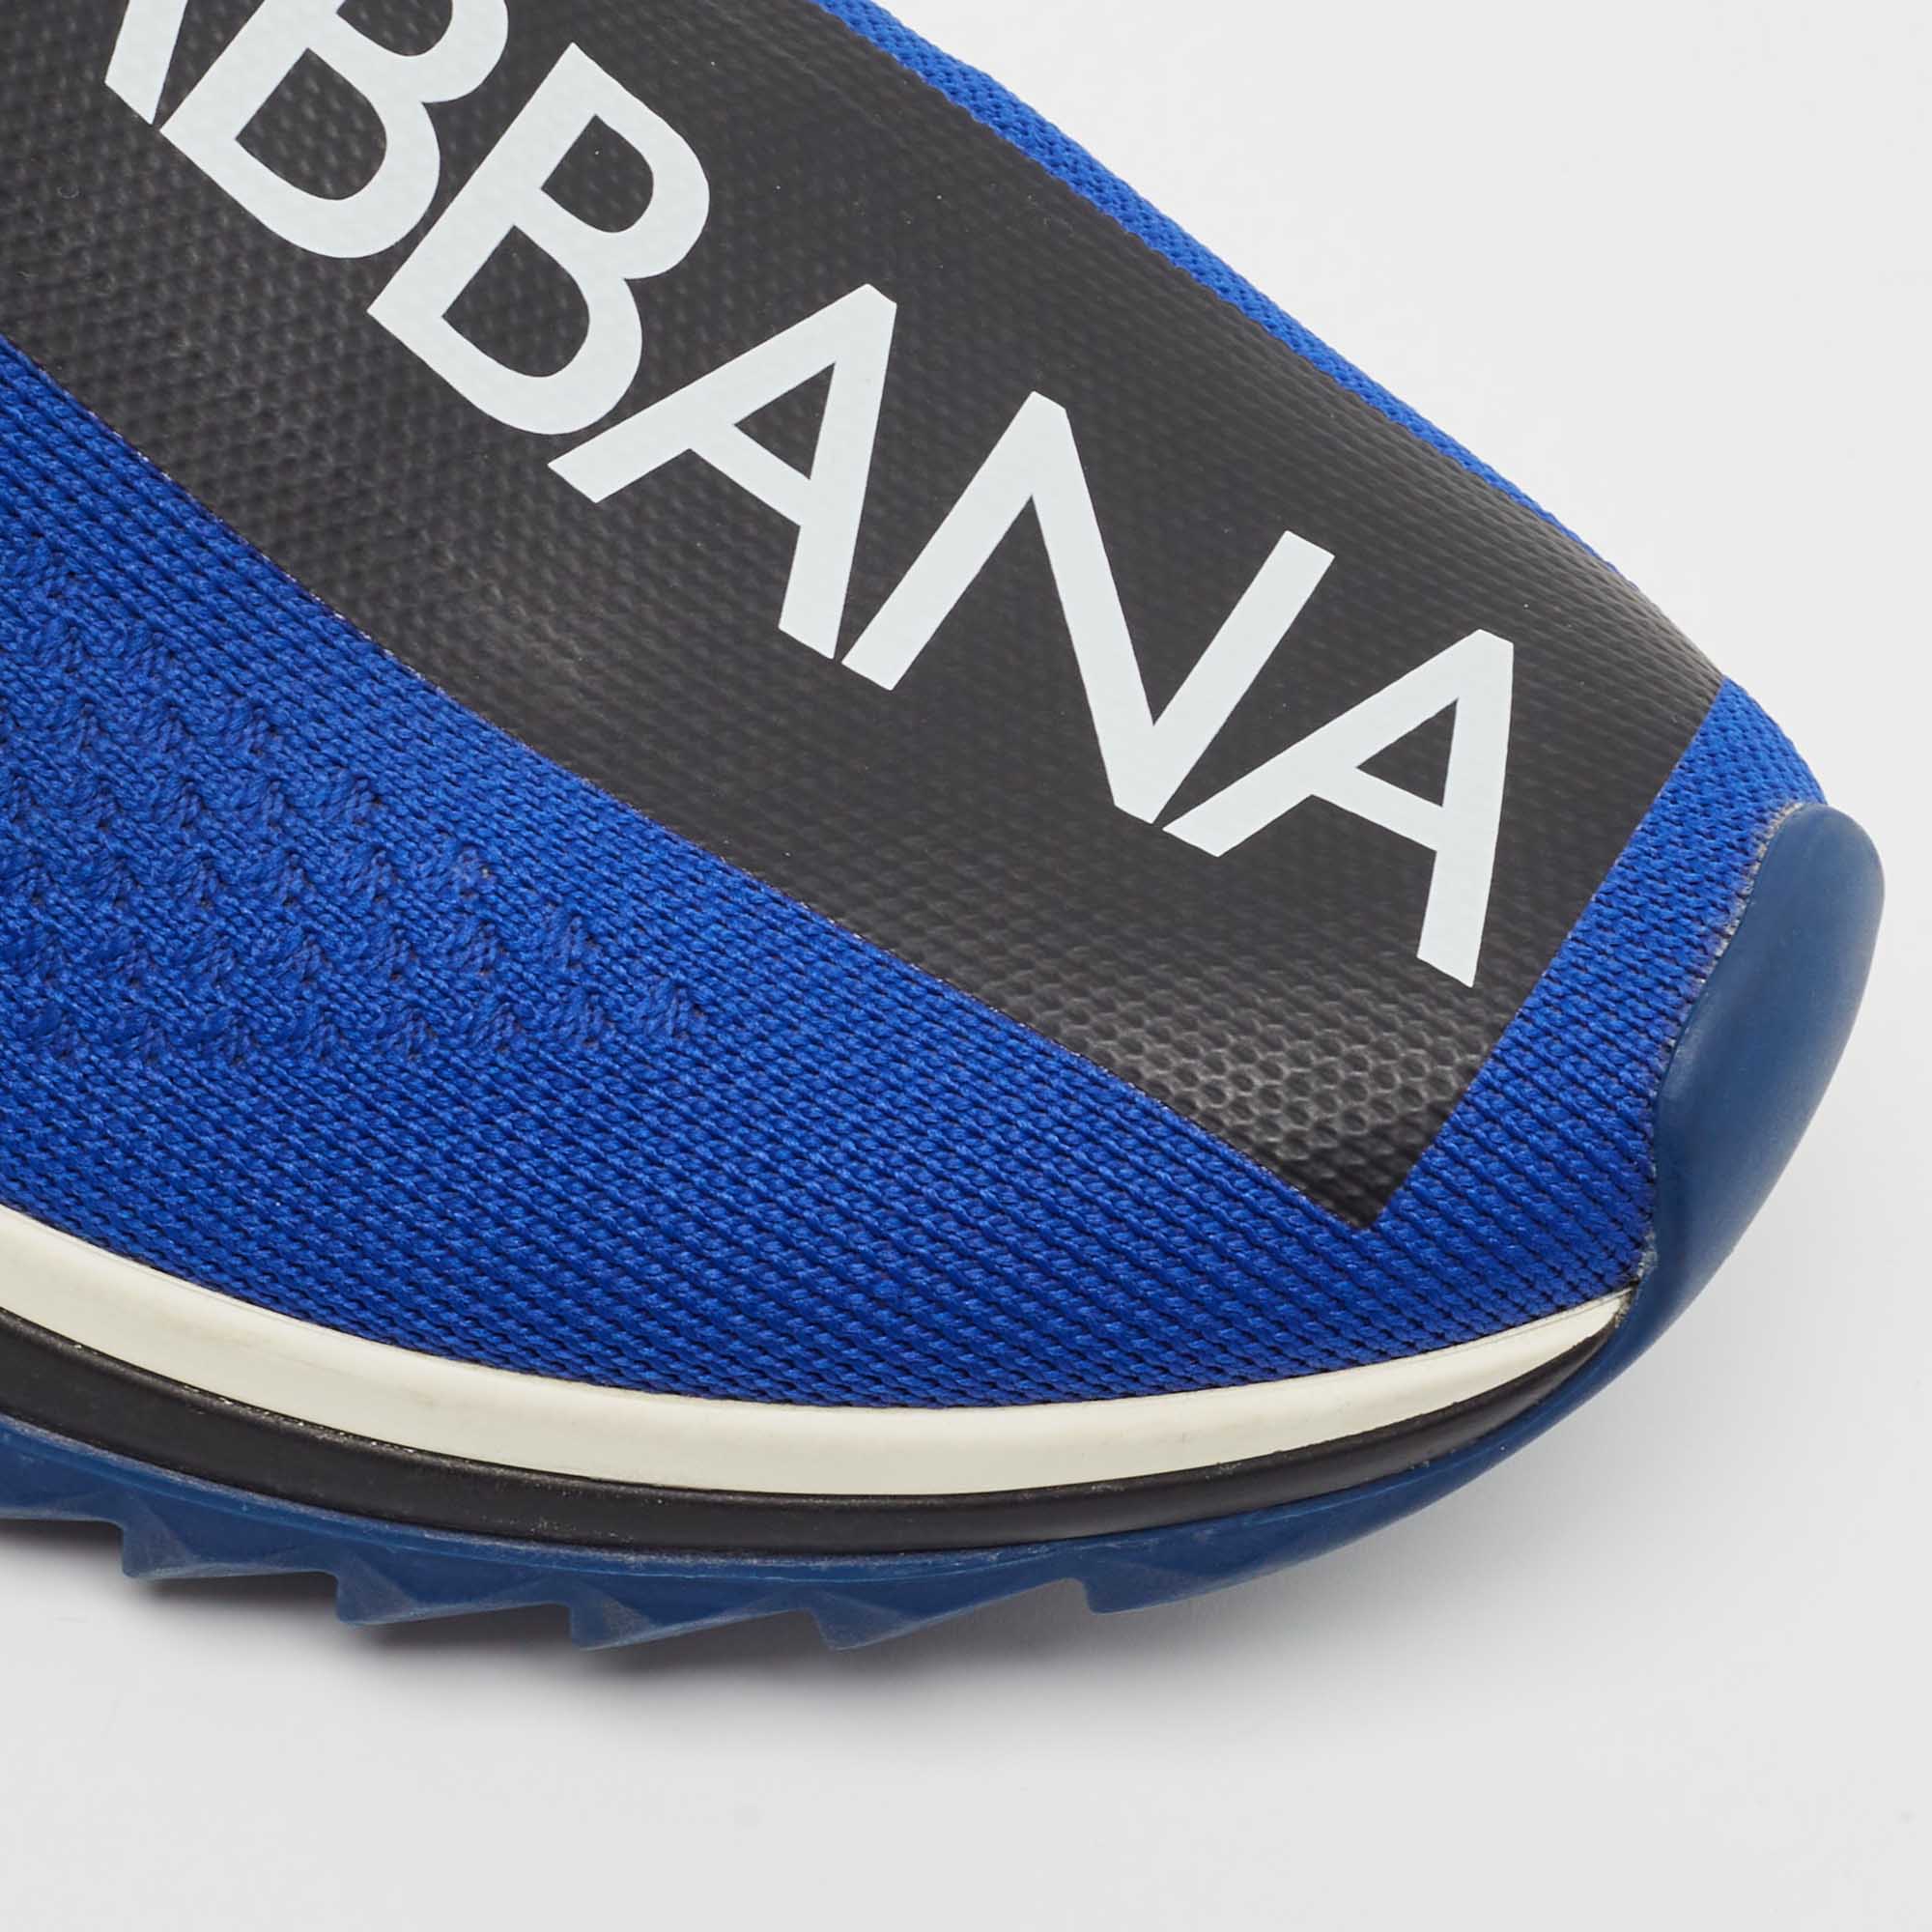 Dolce & Gabbana Blue/Black Knit Fabric Sorrento Sneakers Size 39